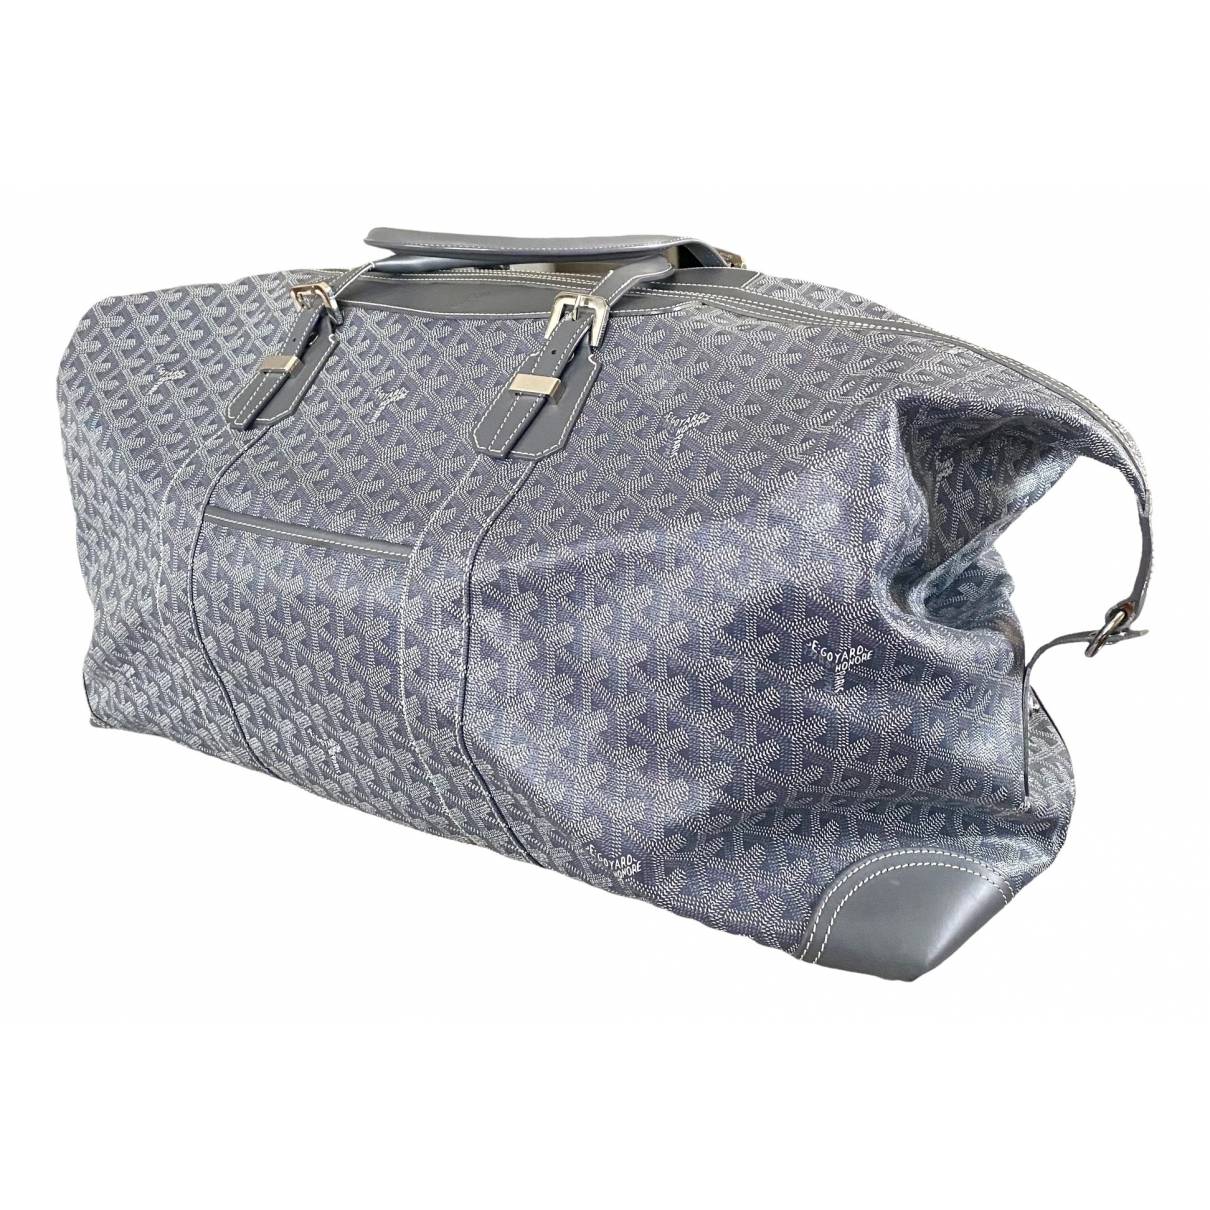 Boeing cloth travel bag